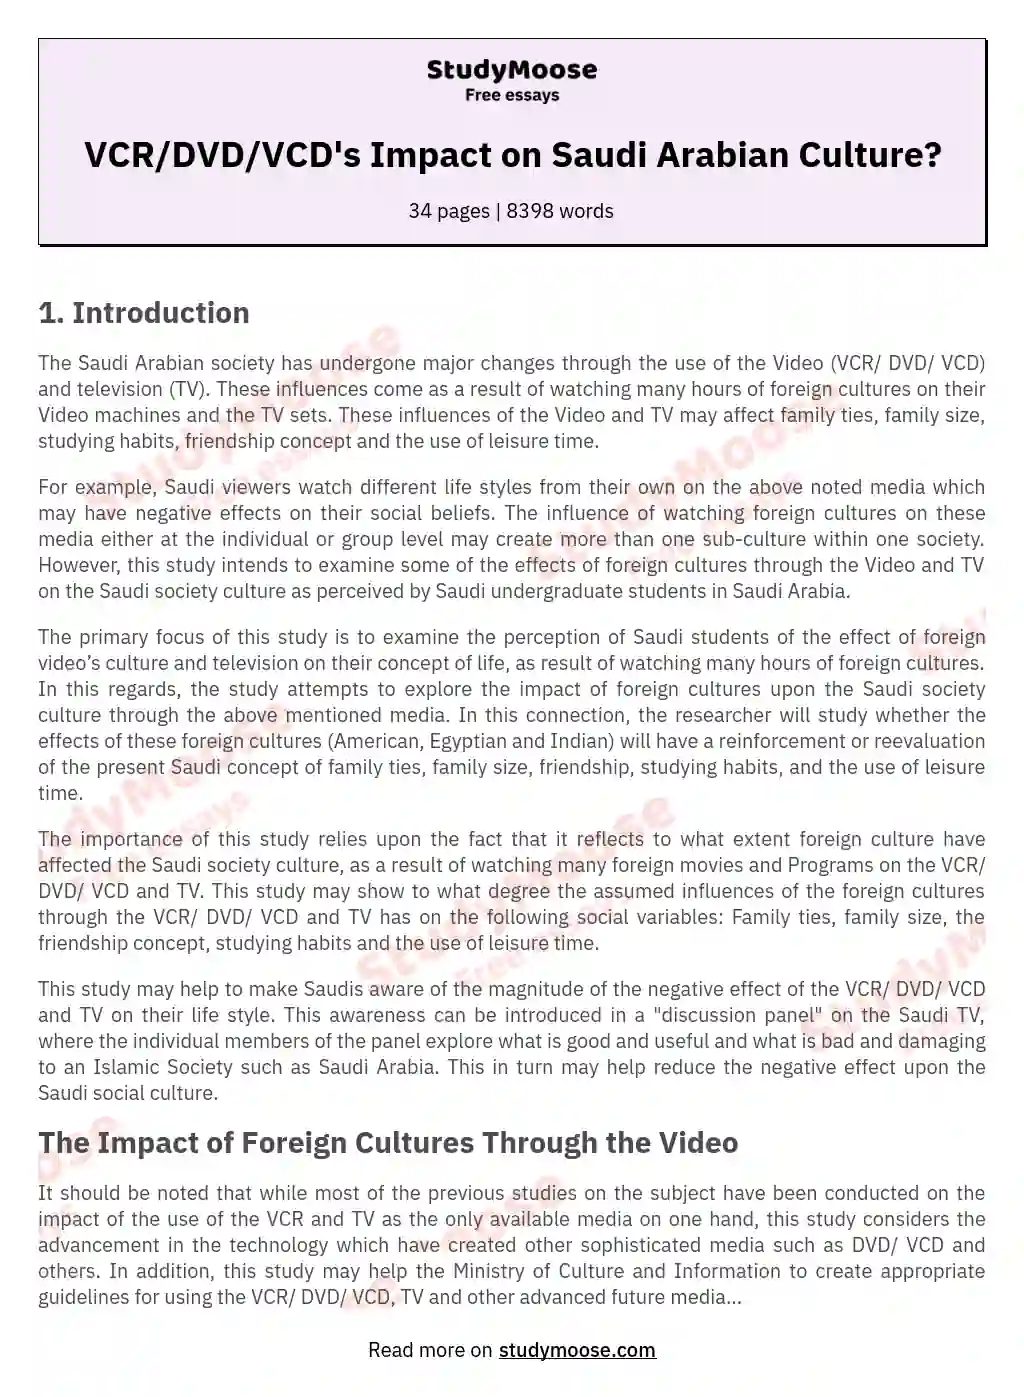 VCR/DVD/VCD's Impact on Saudi Arabian Culture? essay